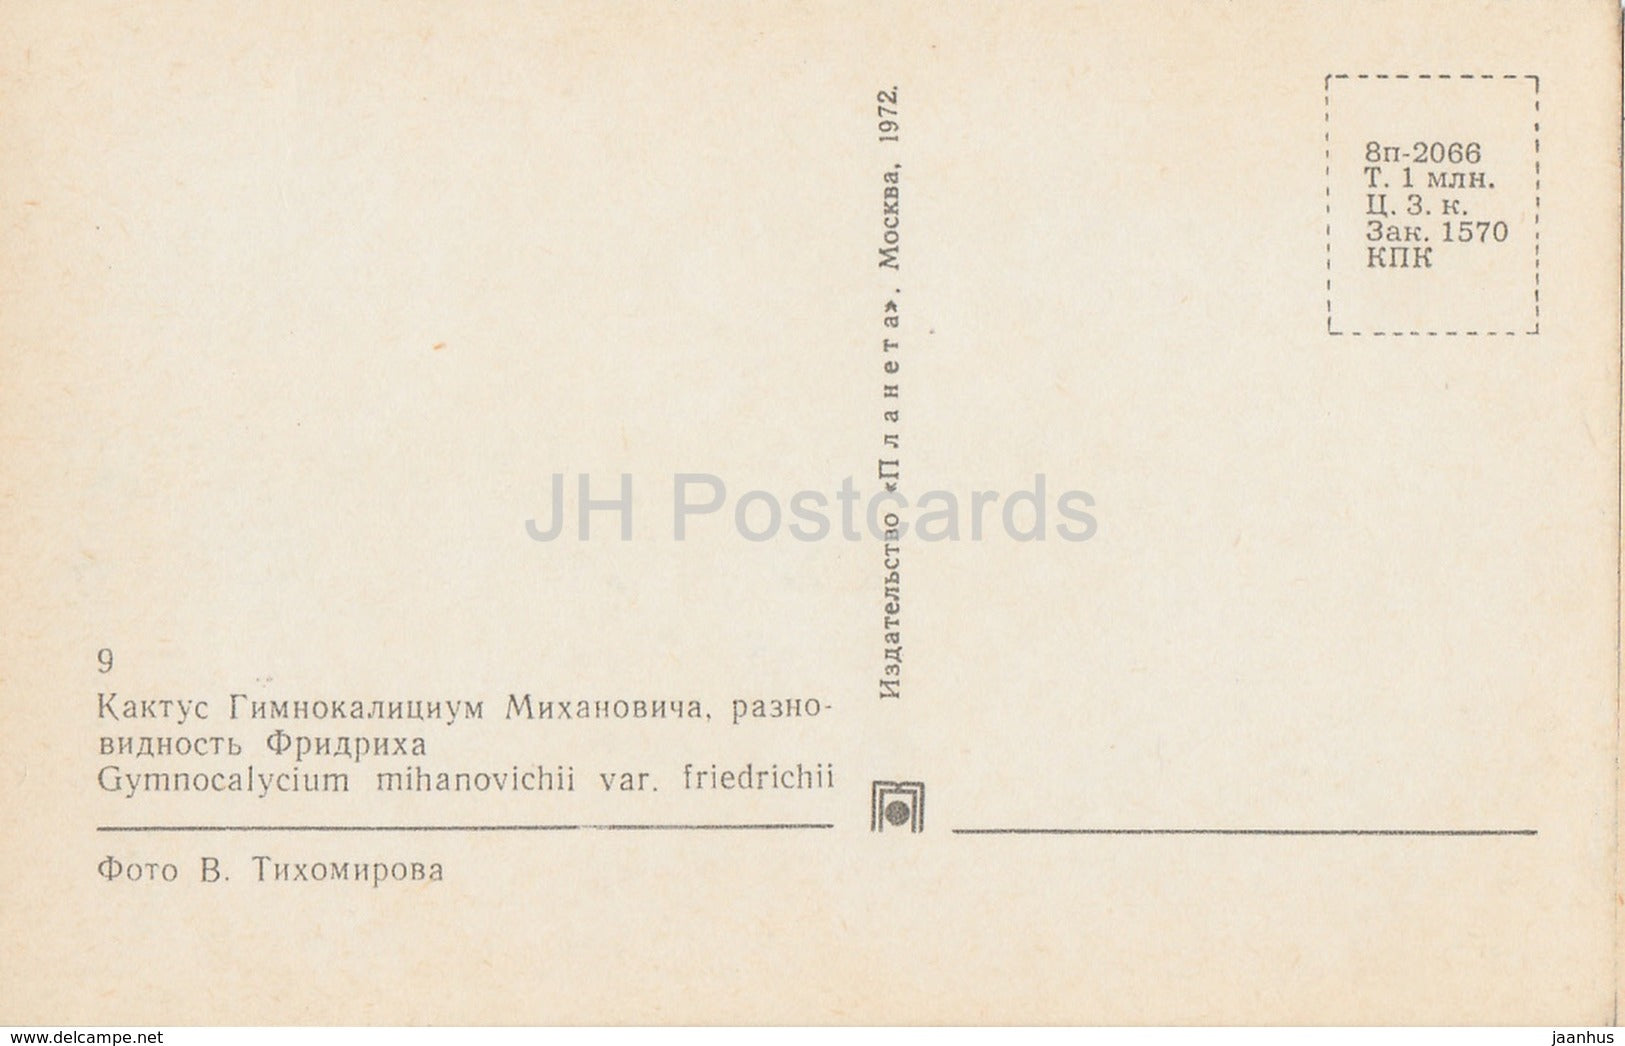 Moon Cactus - Gymnocalycium mihanovichii - Cactus - Flowers - 1972 - Russia USSR - unused - JH Postcards